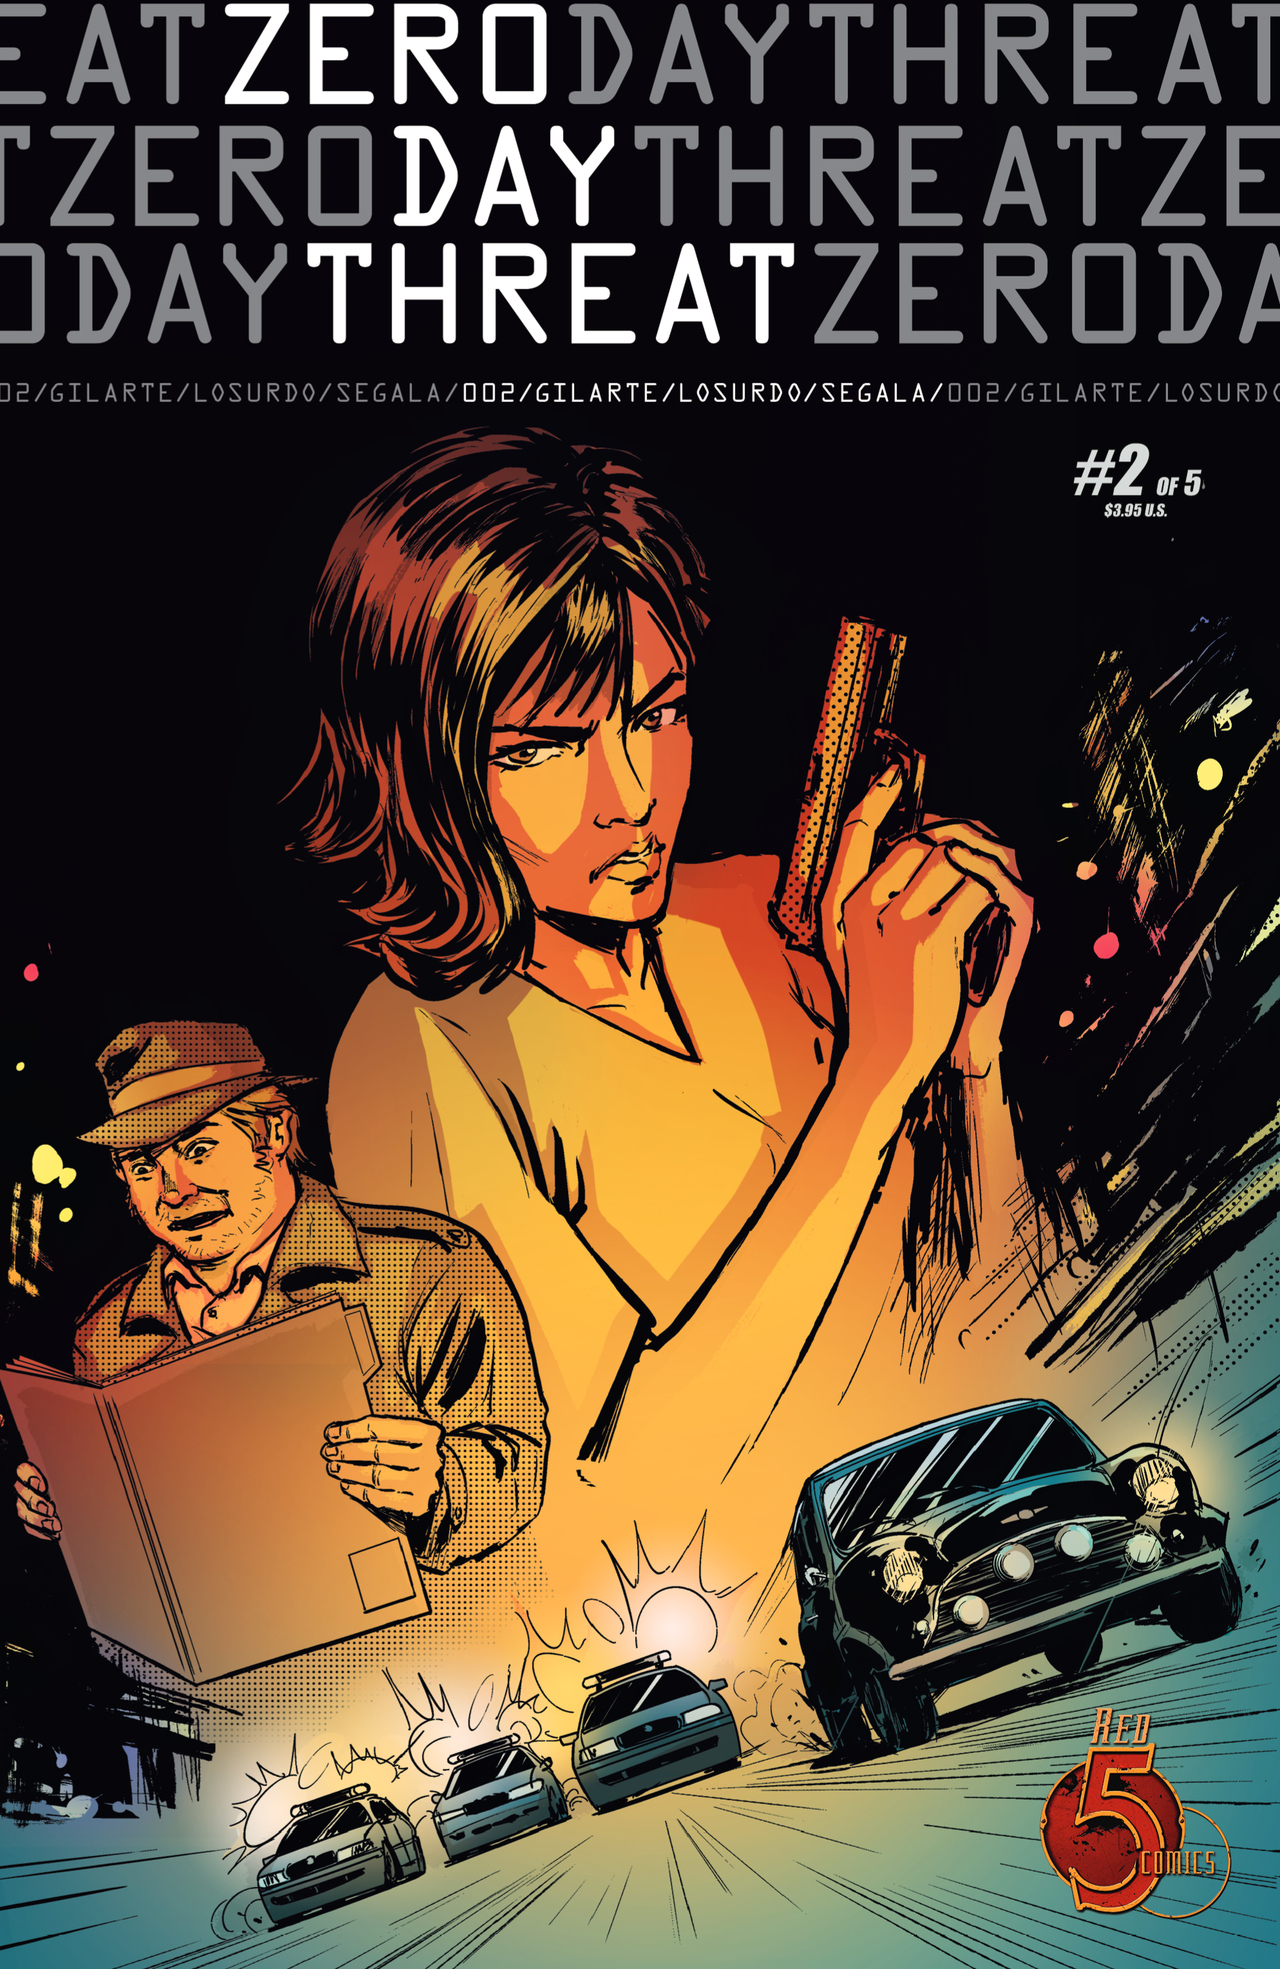 Read online Zero Day Threat comic -  Issue #2 - 1